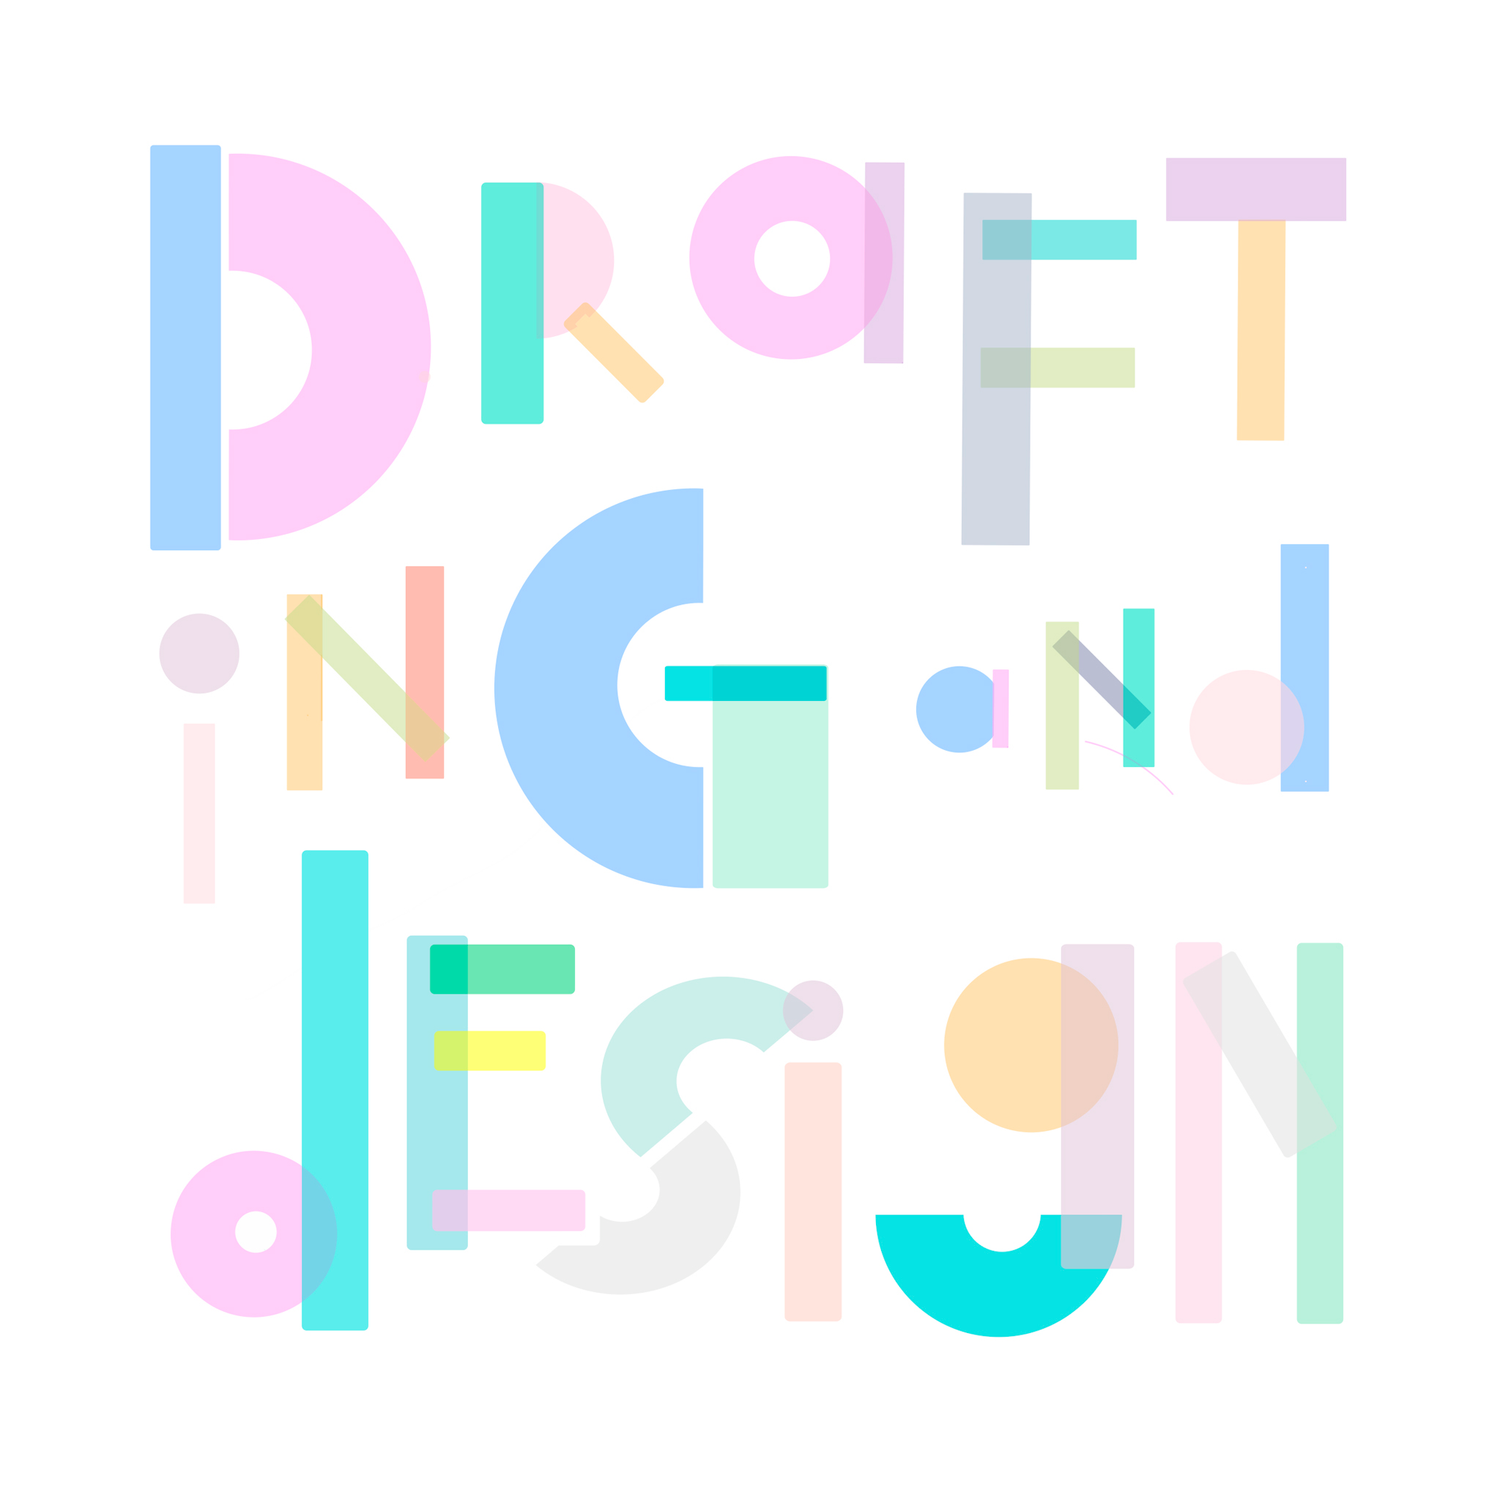 Drafting + Design